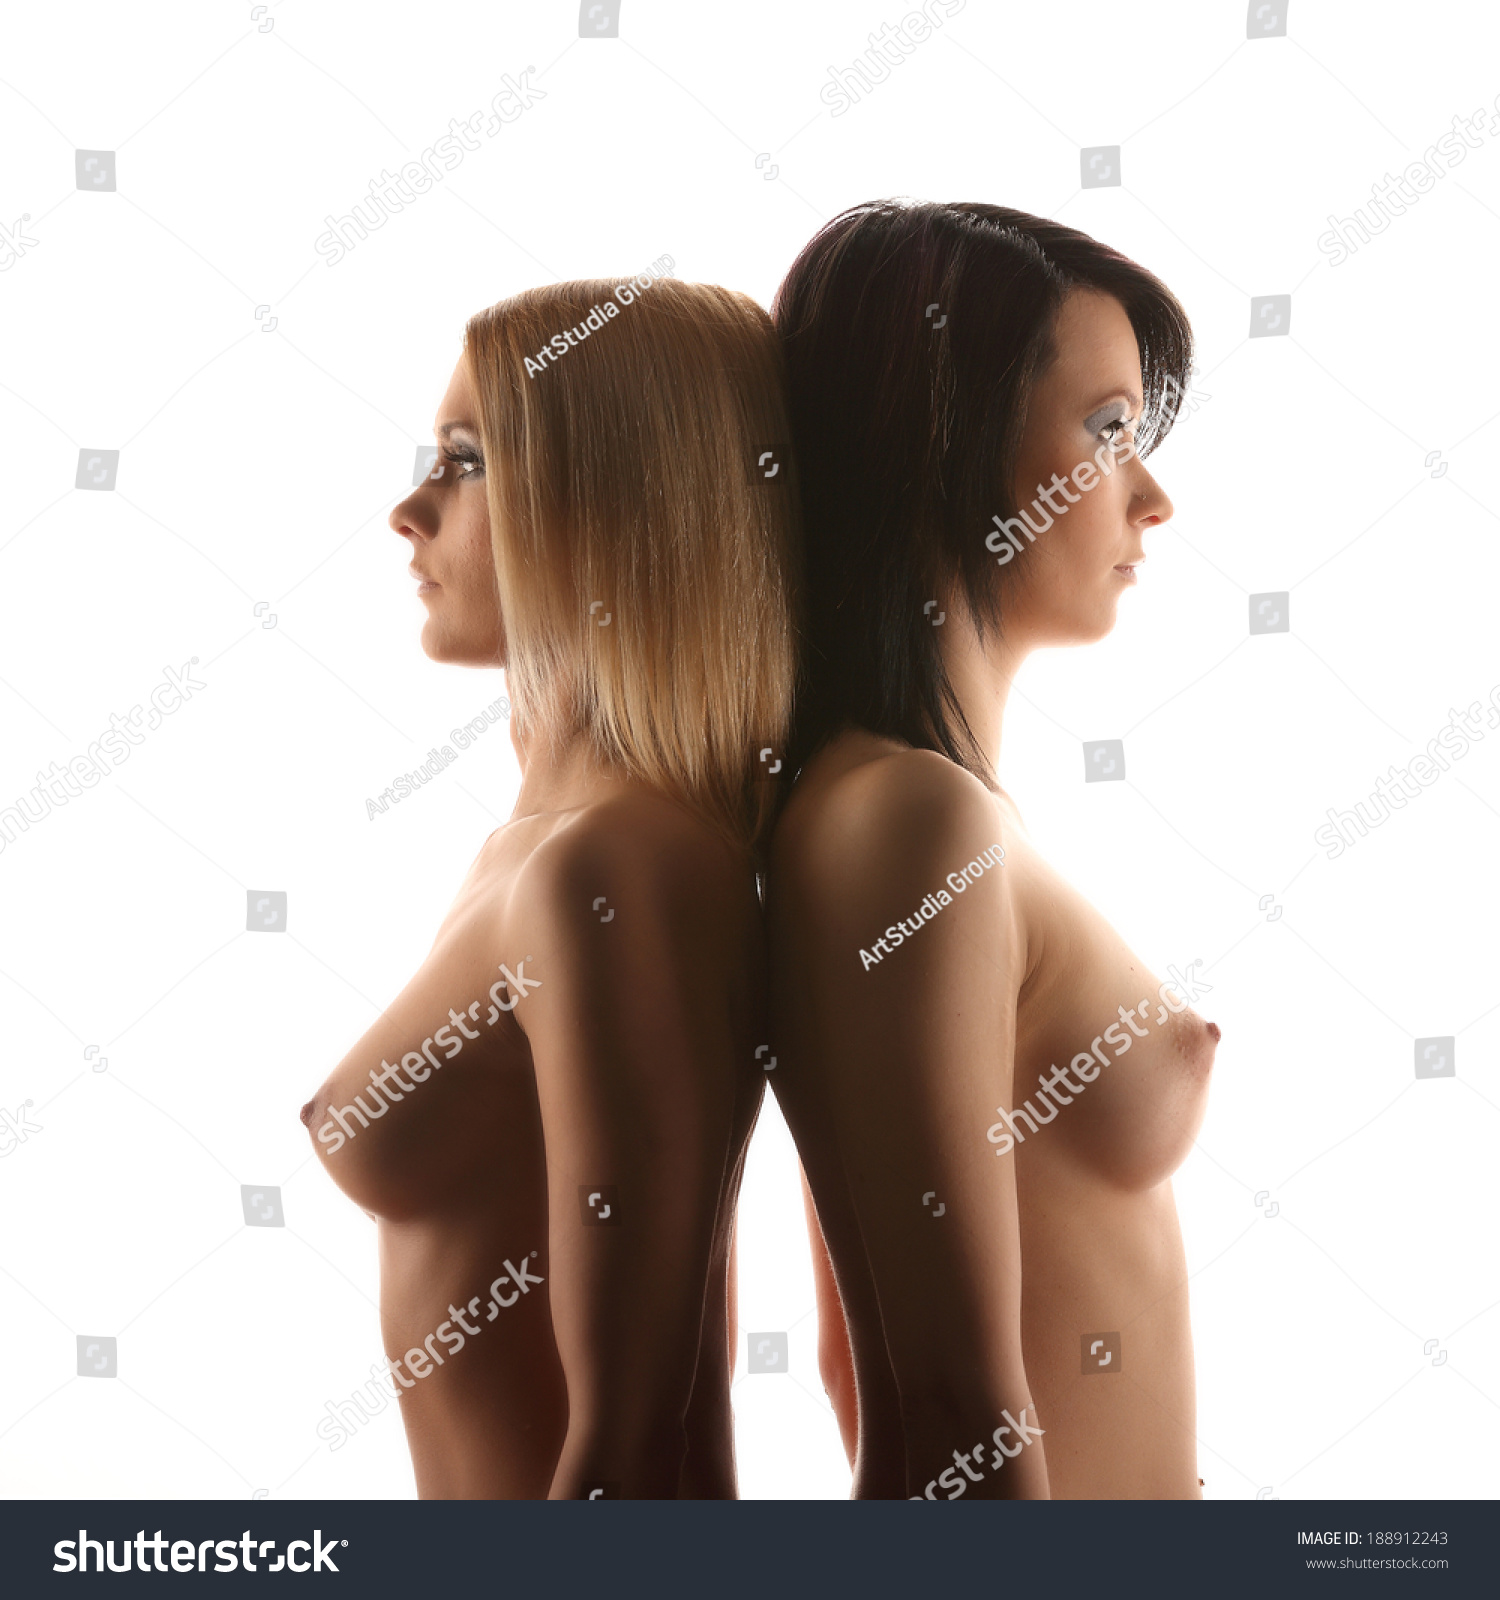 Group Nude Girls Posing